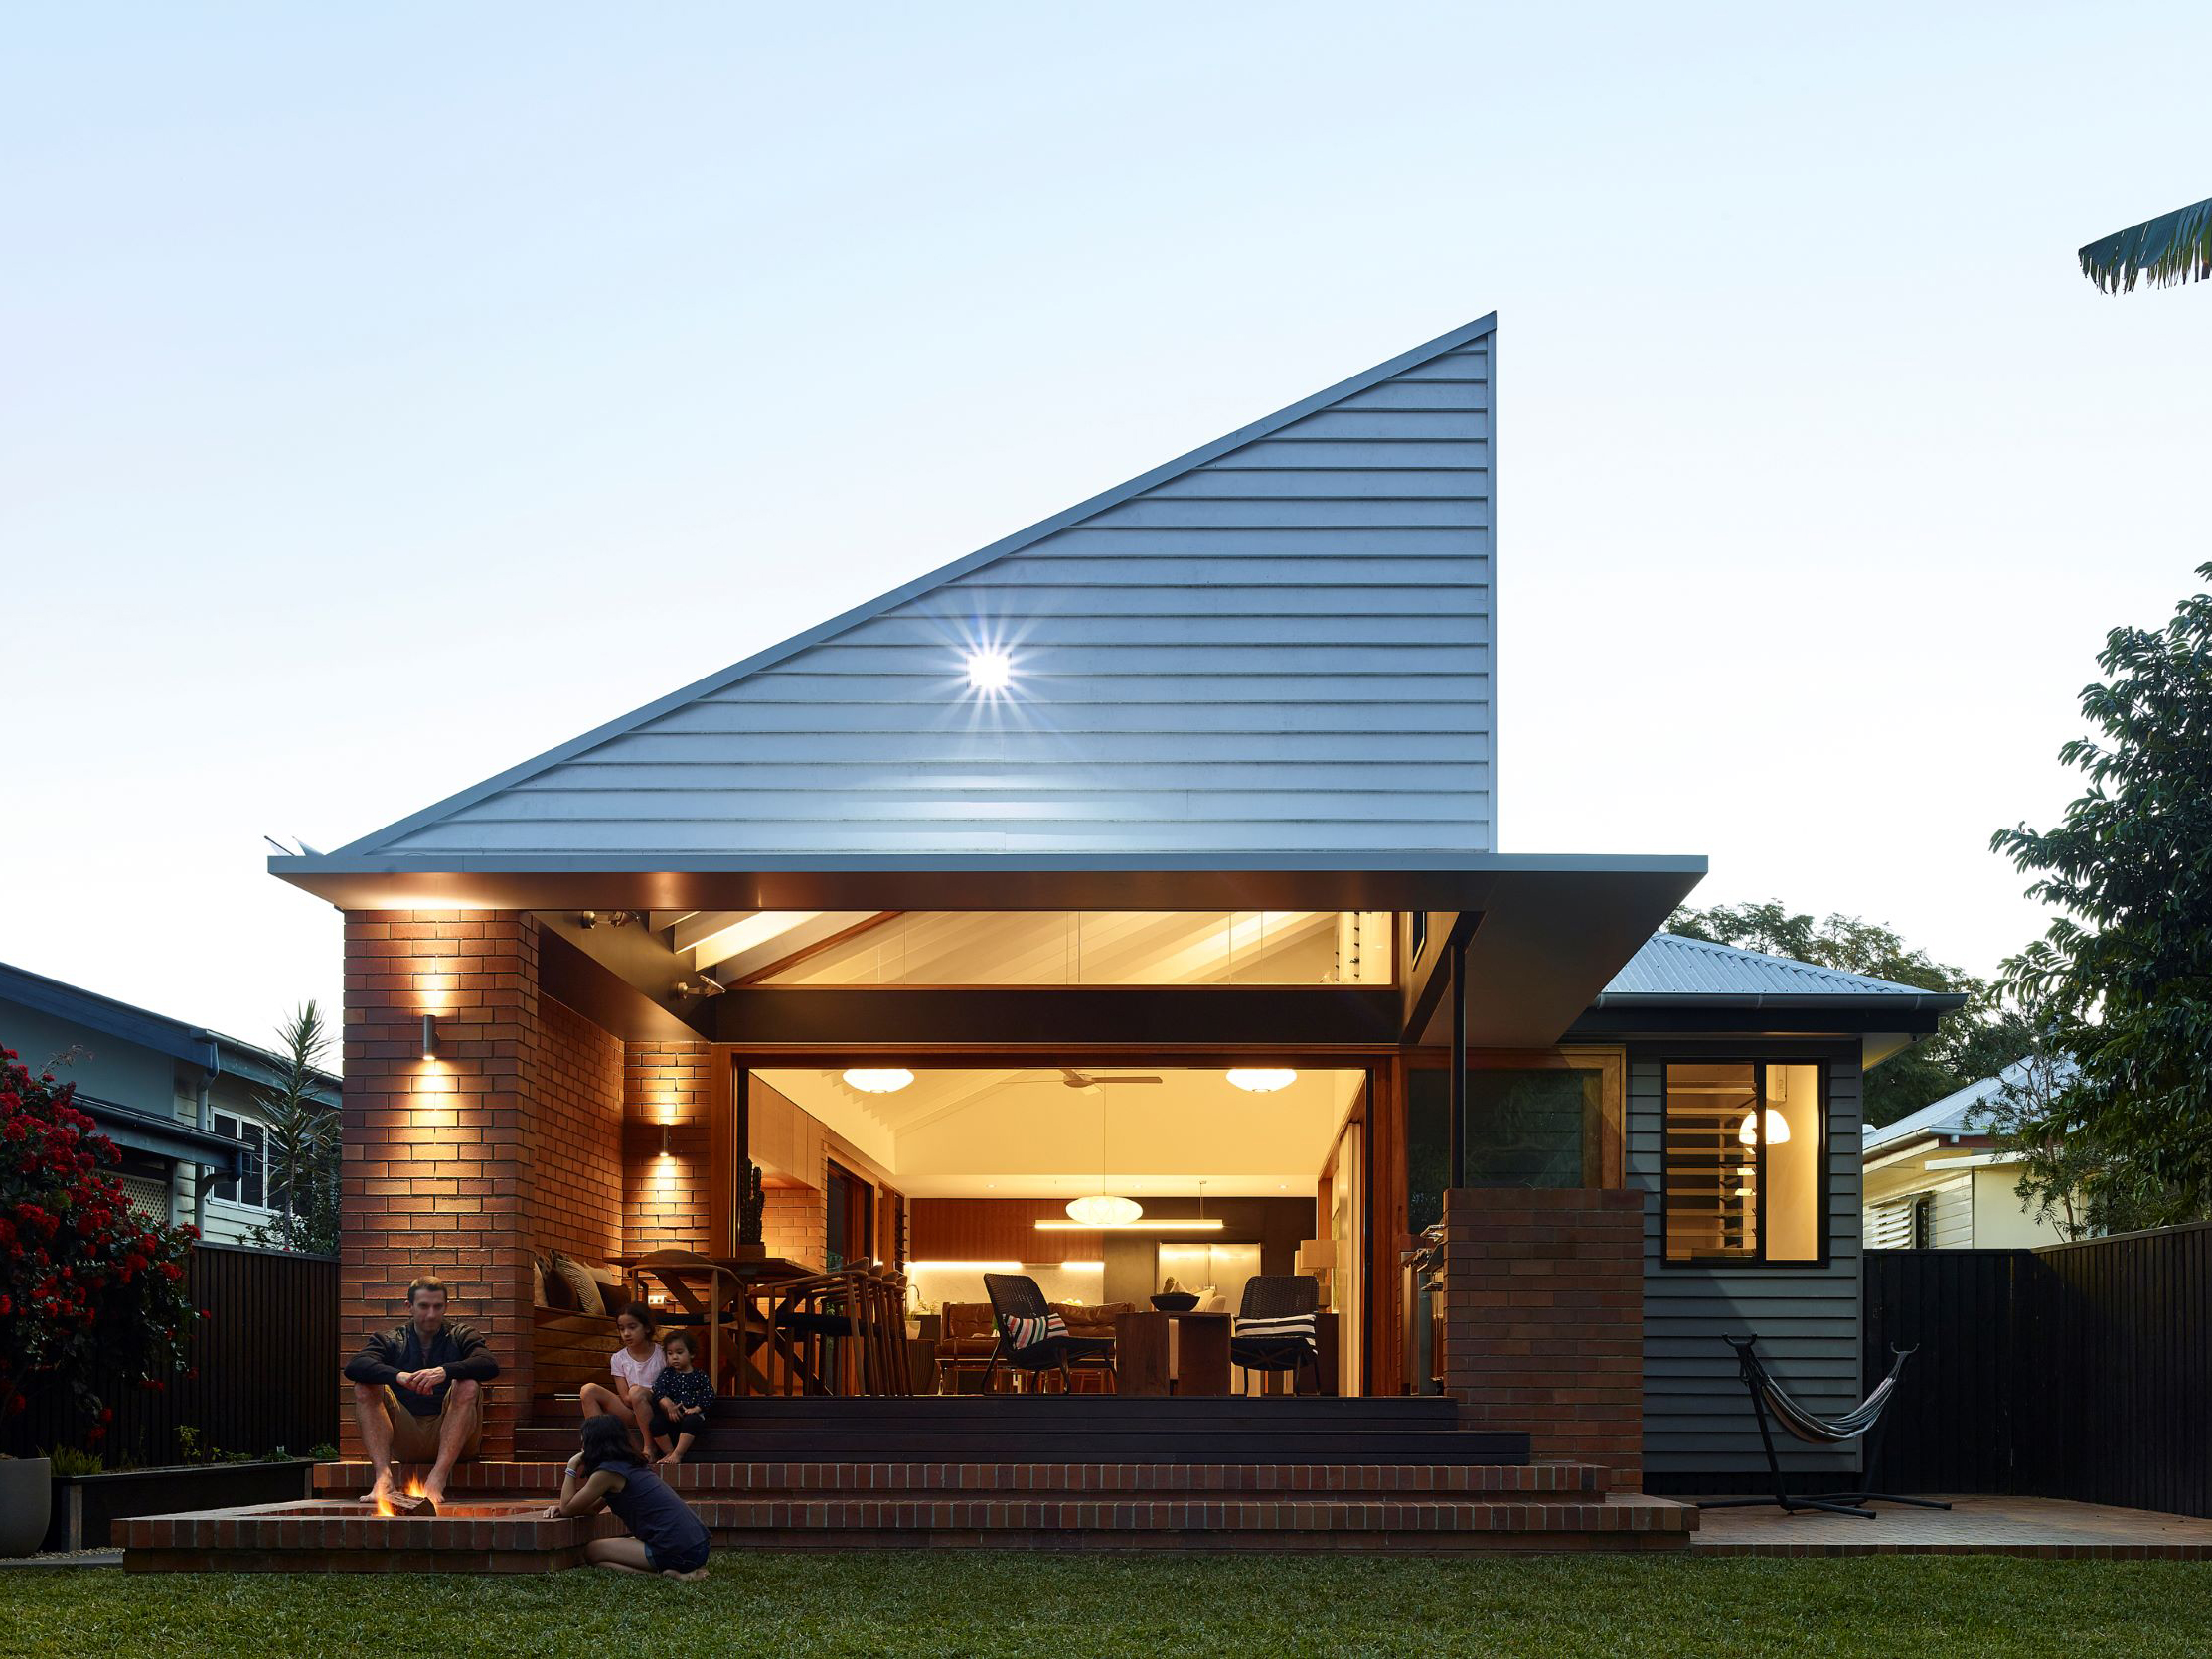 House Architecture: Architecturally Designed Homes | Architecture & Design